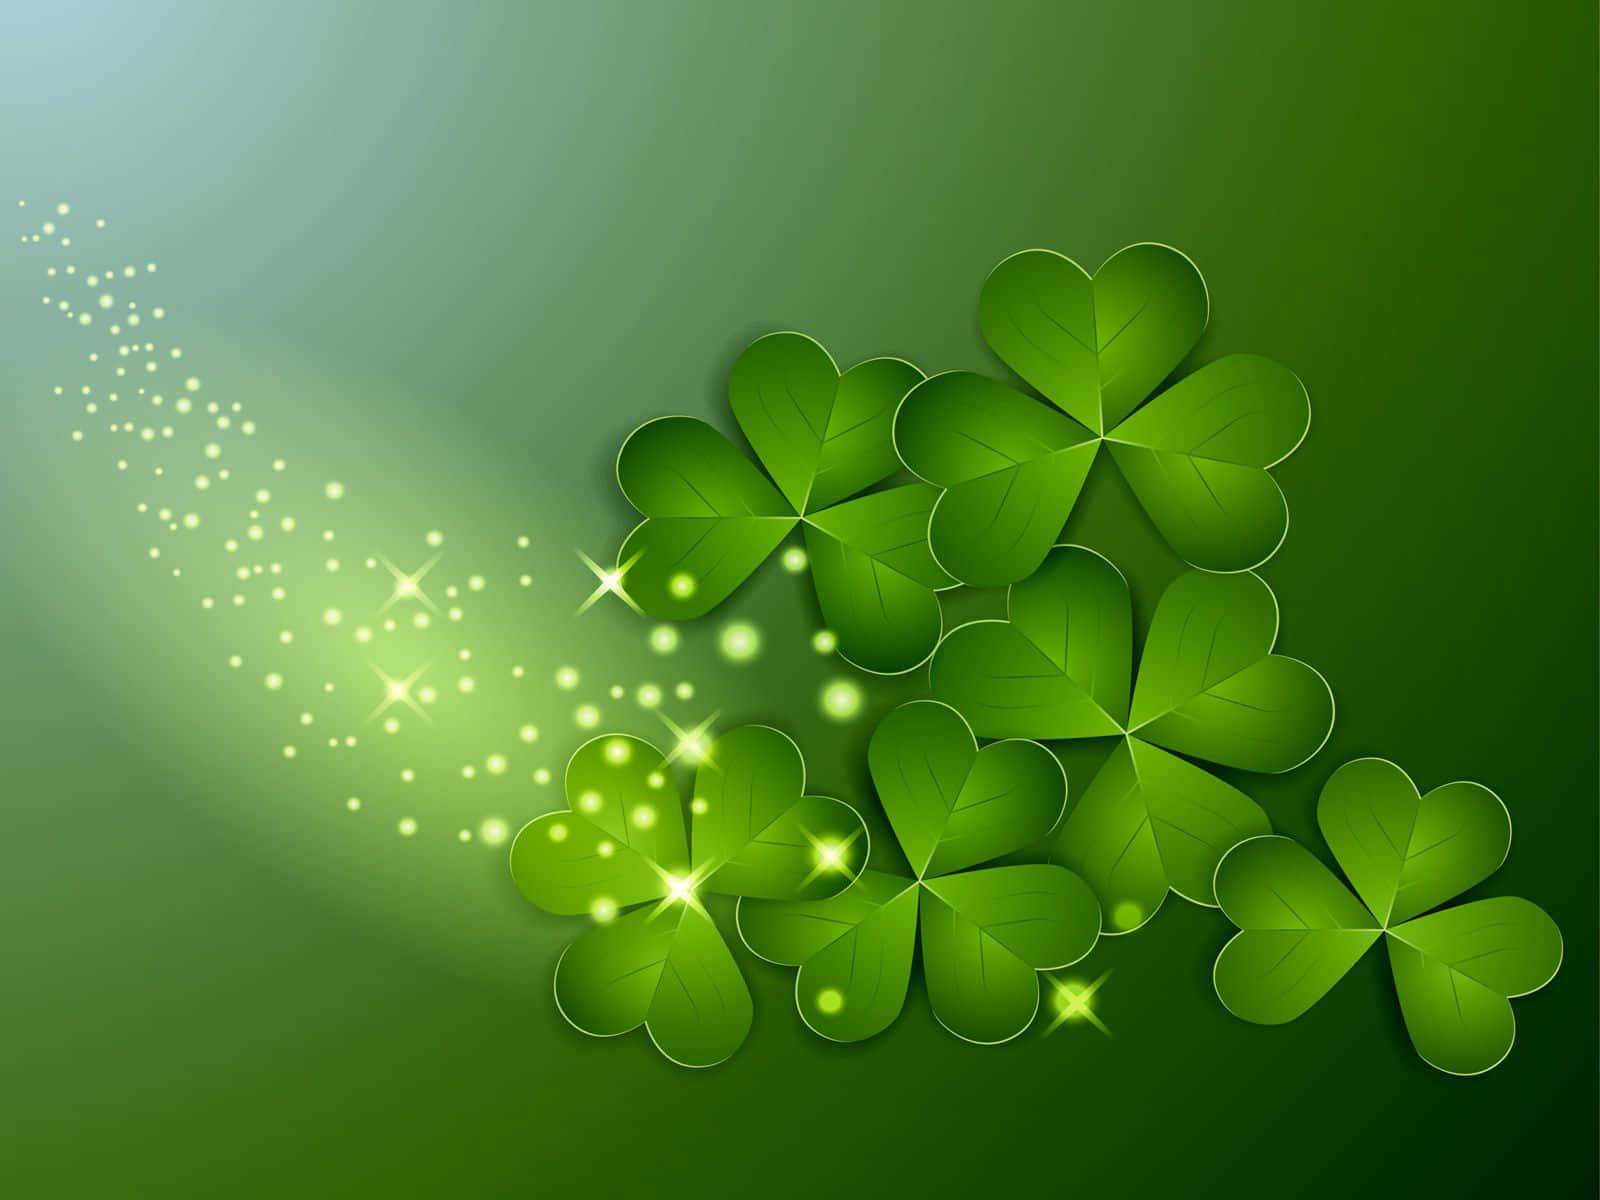 A Celebration of Irish Heritage - Saint Patrick's Day Background